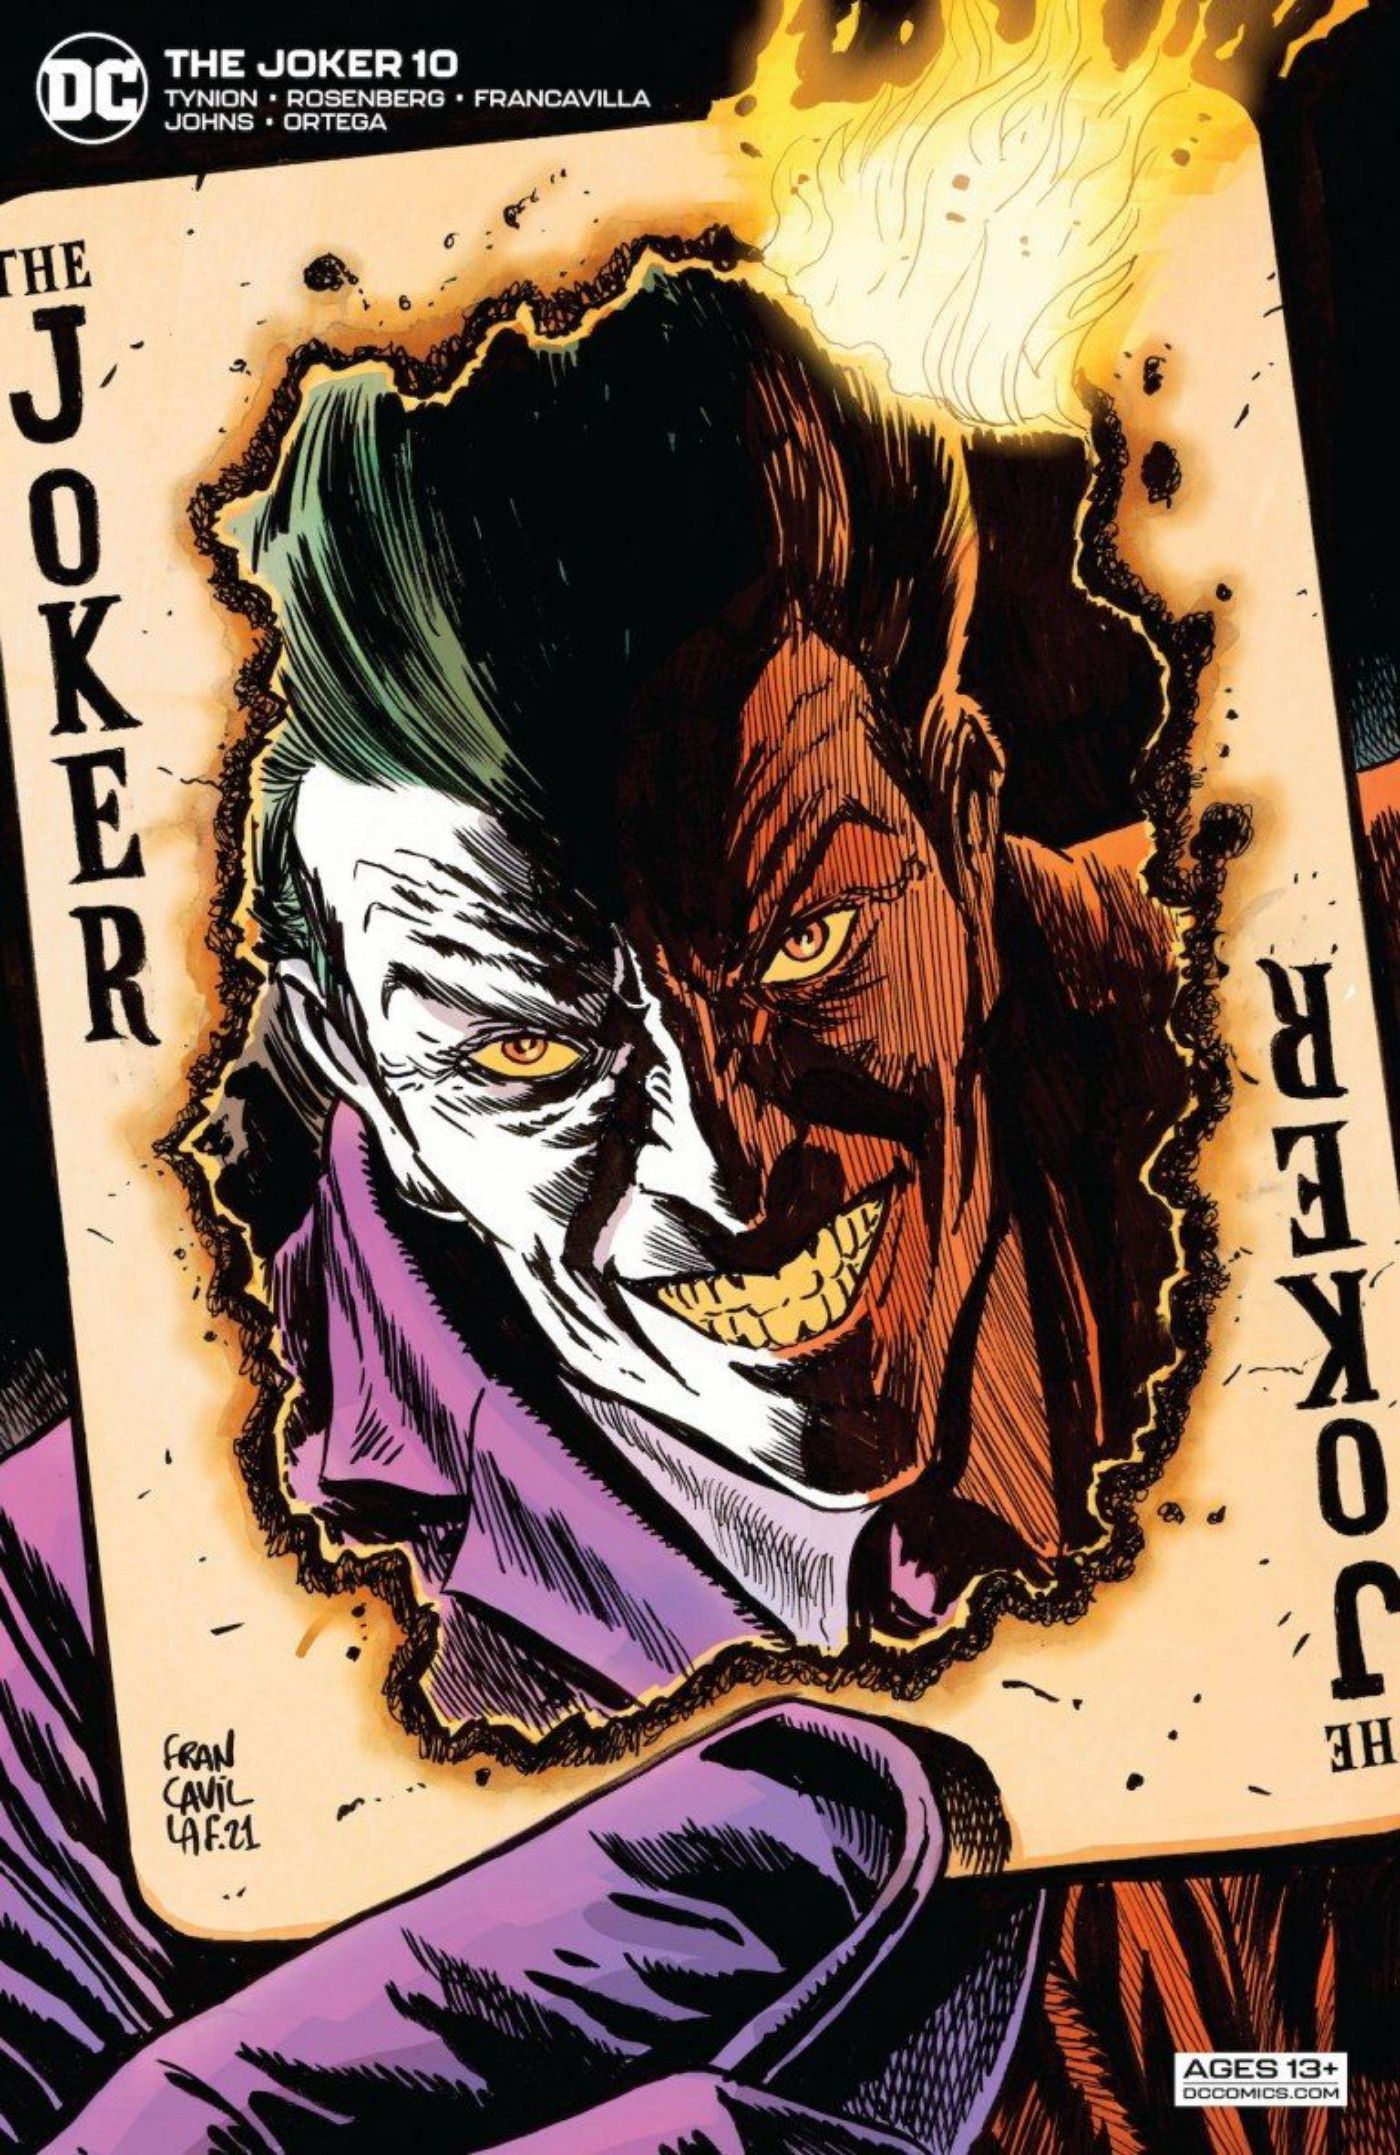 Joker 10 preview cover, showing Joker looking through a burning Joker playing card